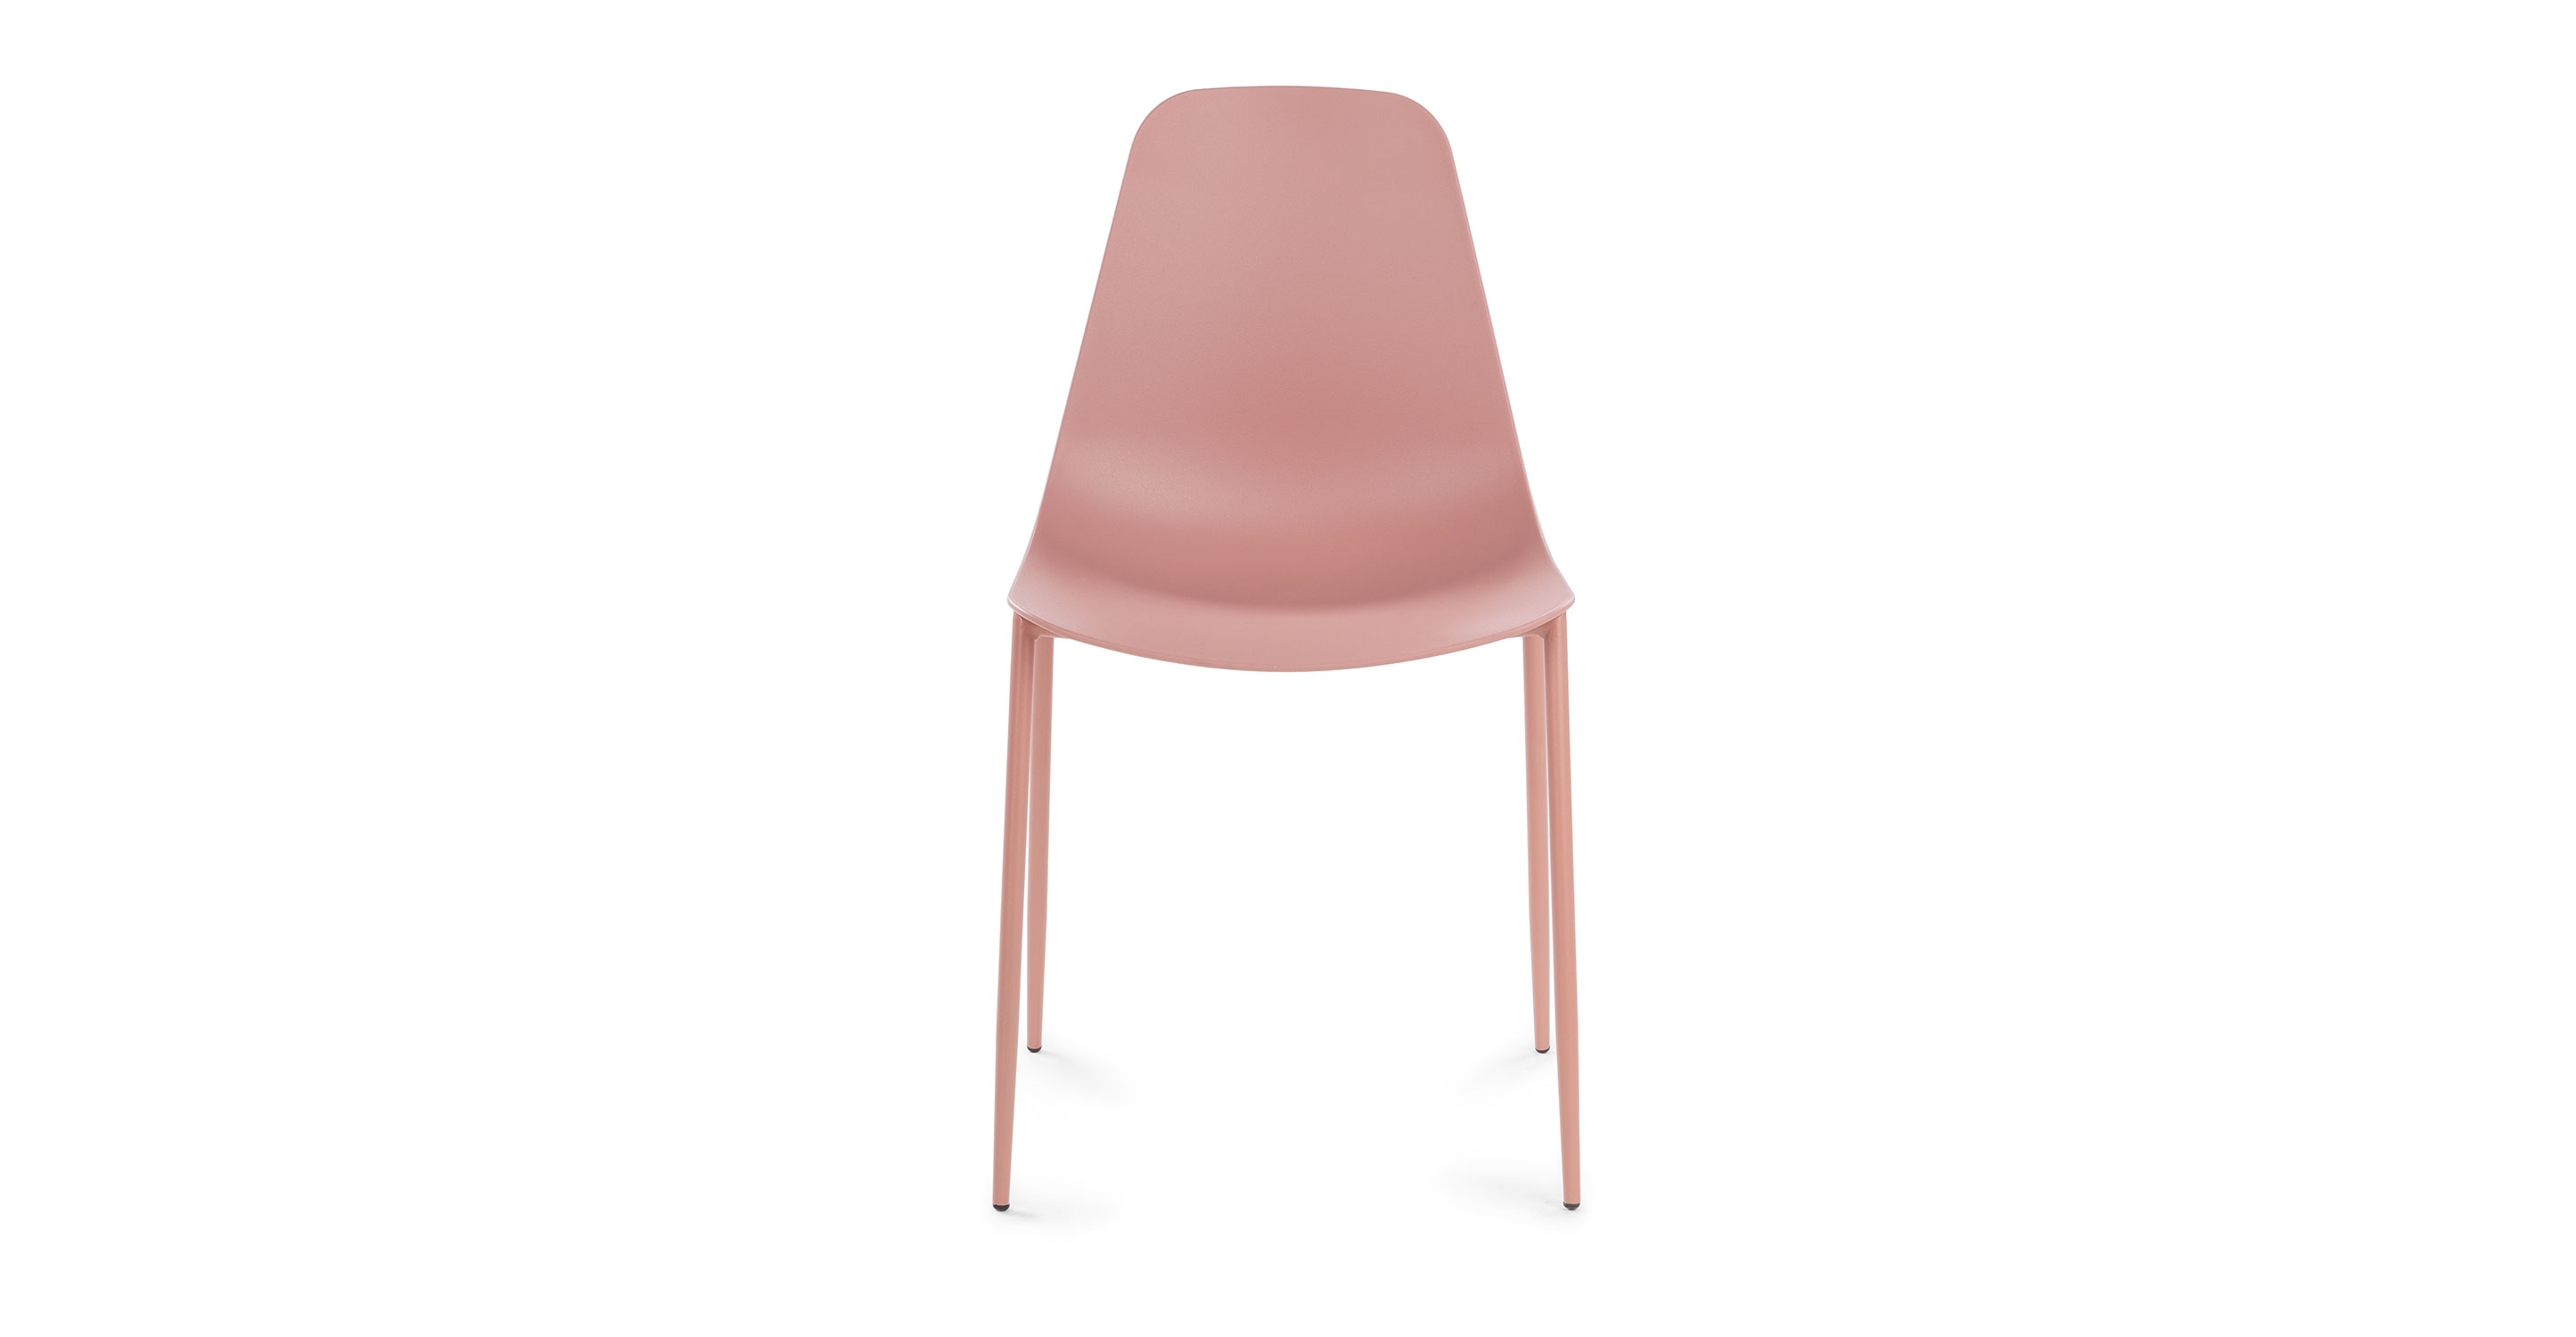 Svelti Dusty Pink Dining Chair - Image 1